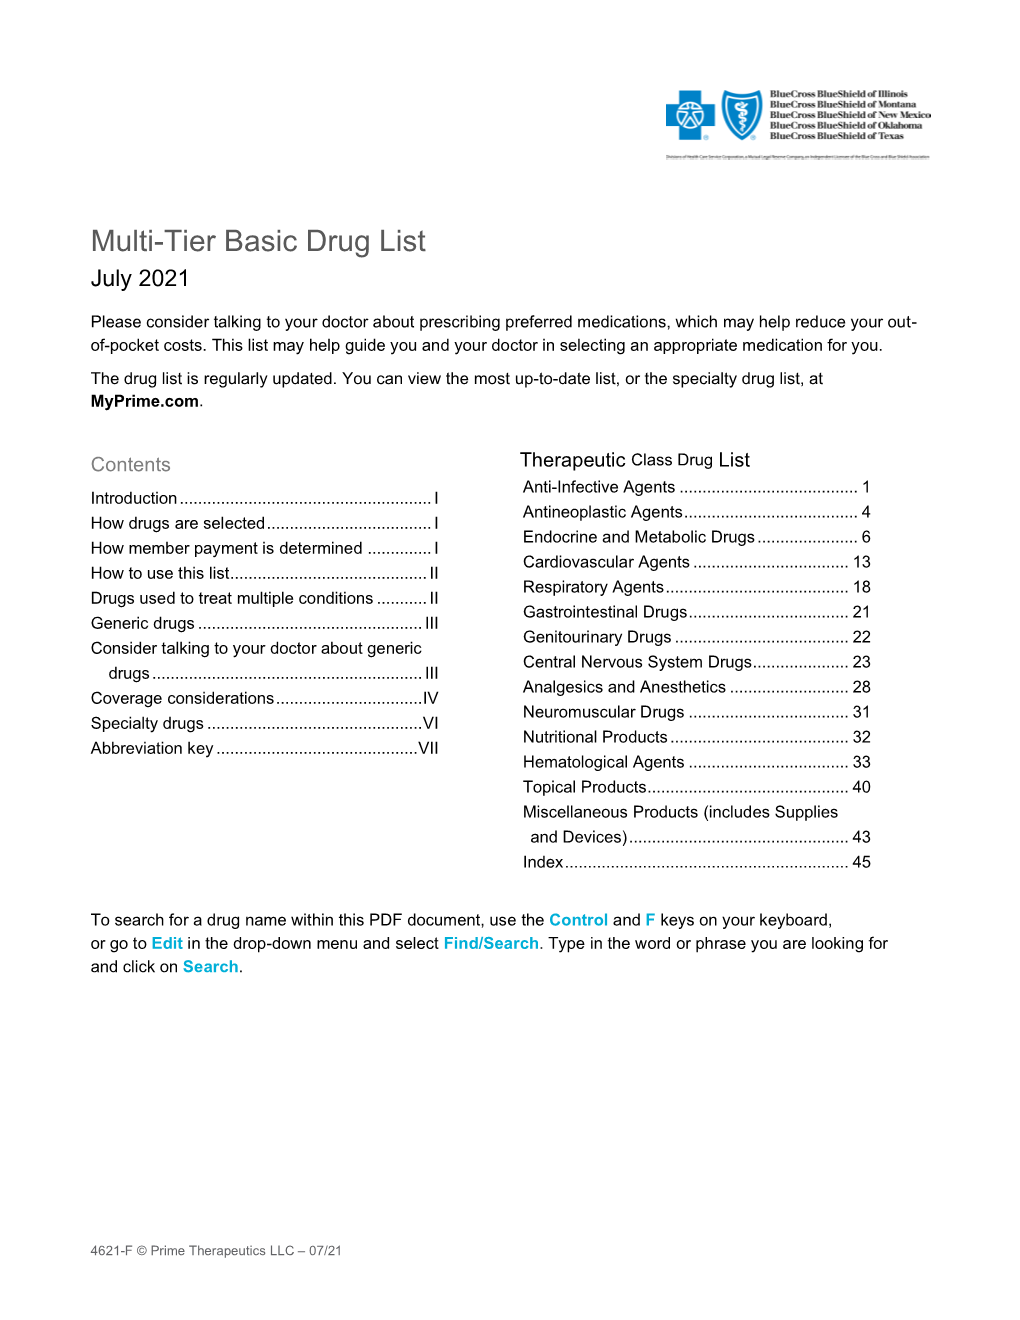 Blue Cross and Blue Shield April 2021 Multi-Tier Basic Drug List